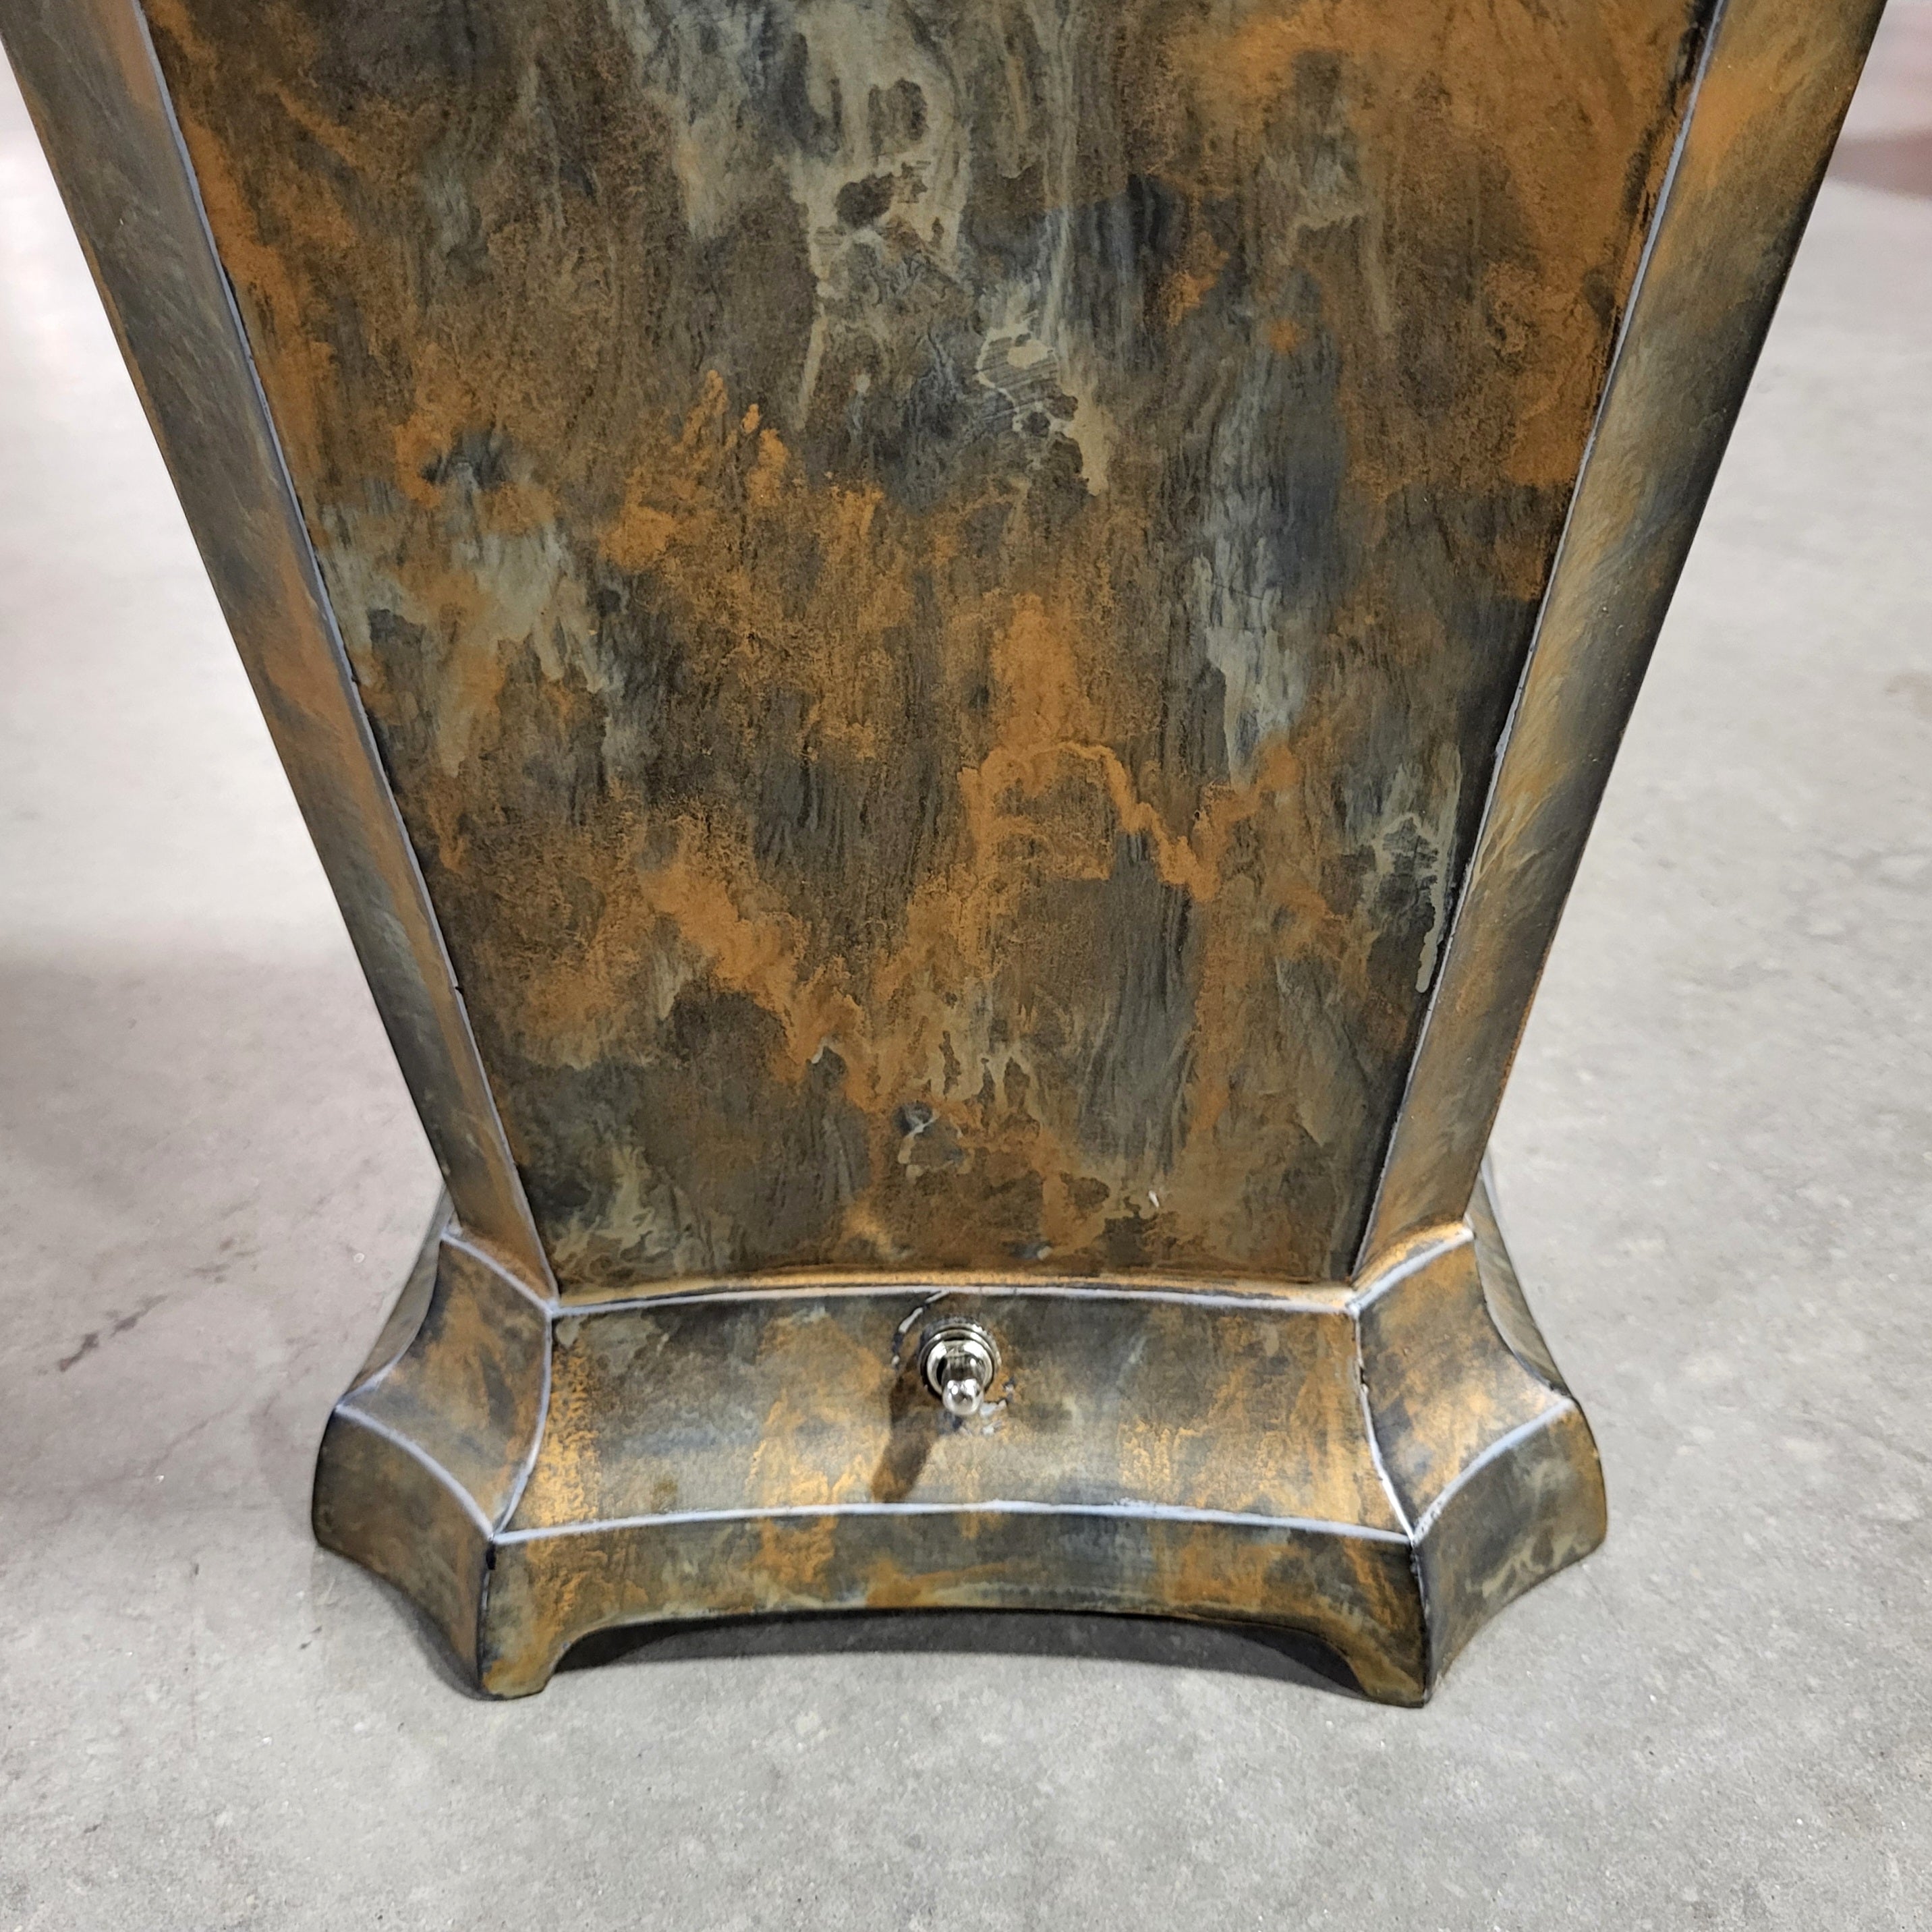 Oriental Gilded Metal Table Lamp 11"x 9"x 19"